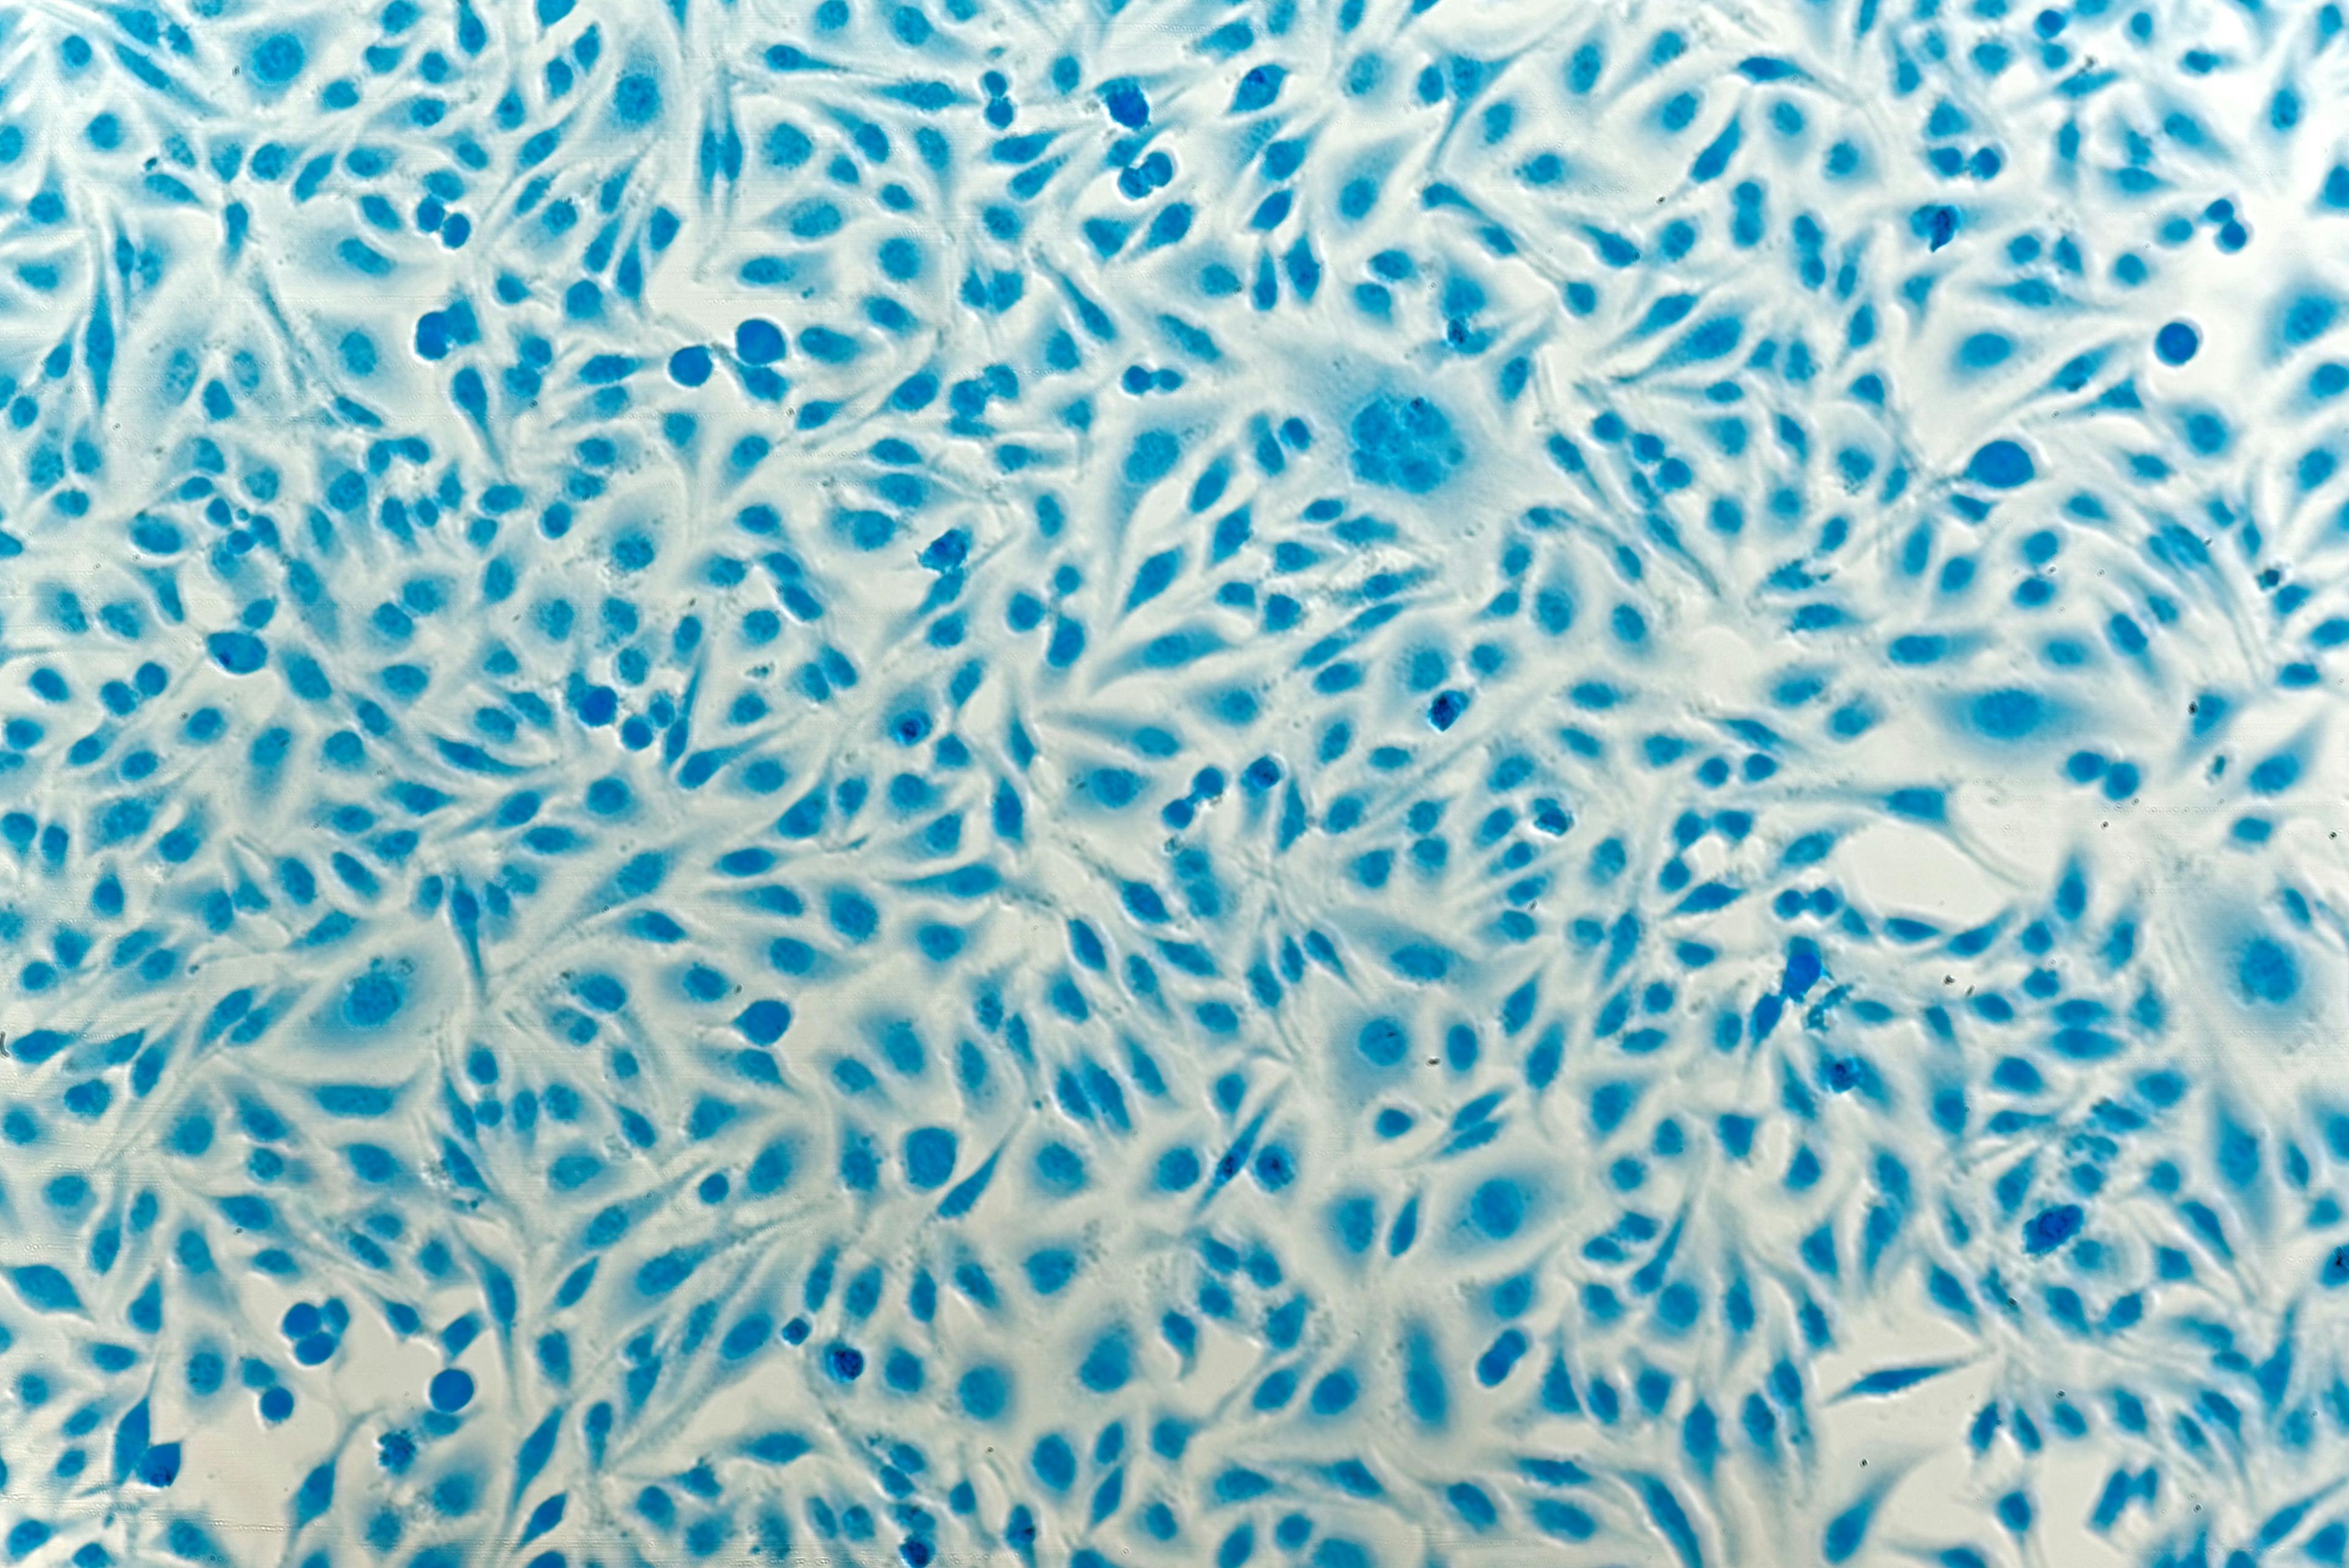 Image of cervical cancer cells: ©heitipaves - stock.adobe.com